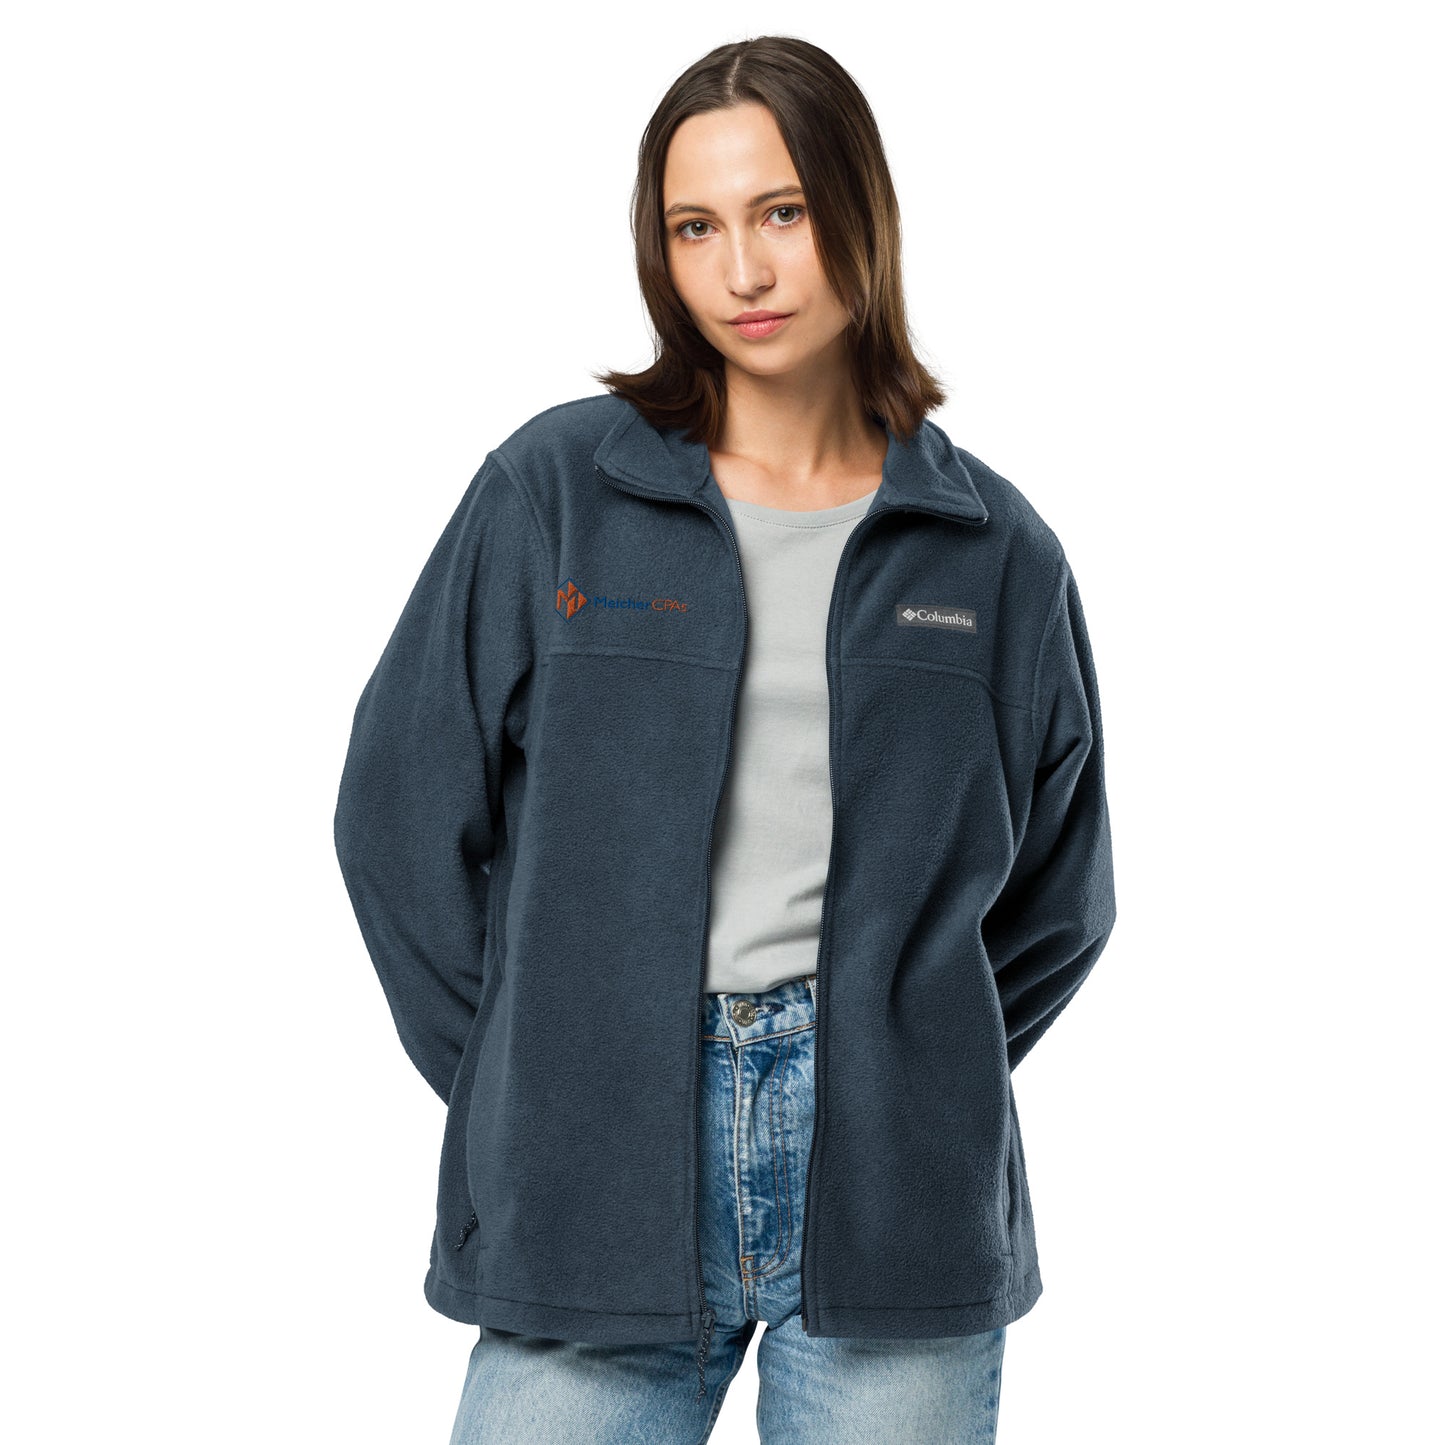 Meicher - Women's Columbia fleece jacket